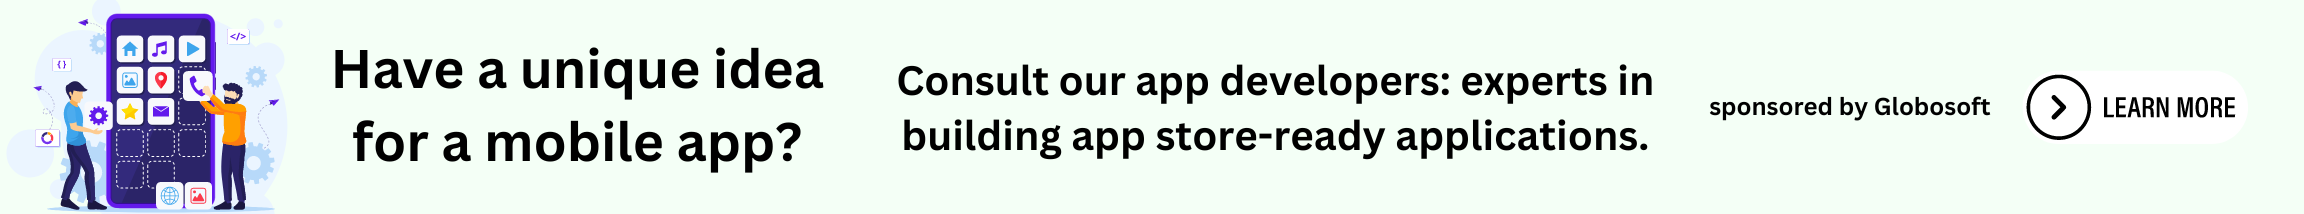 Ad Mobile App